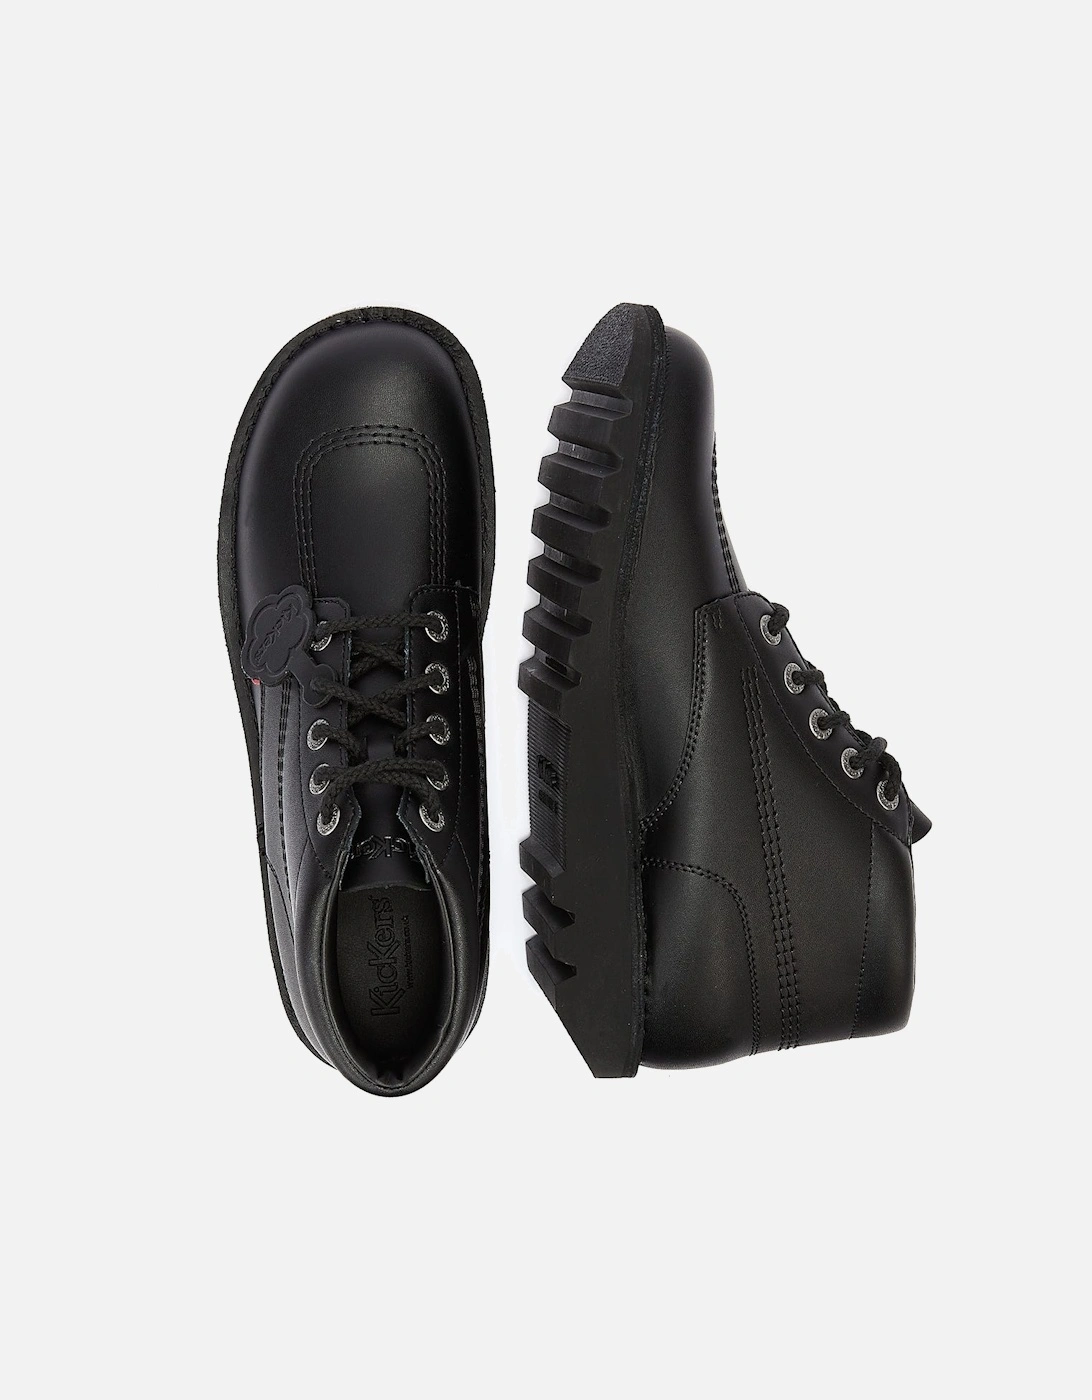 Kick Hi Mens Black Leather Ankle Boots